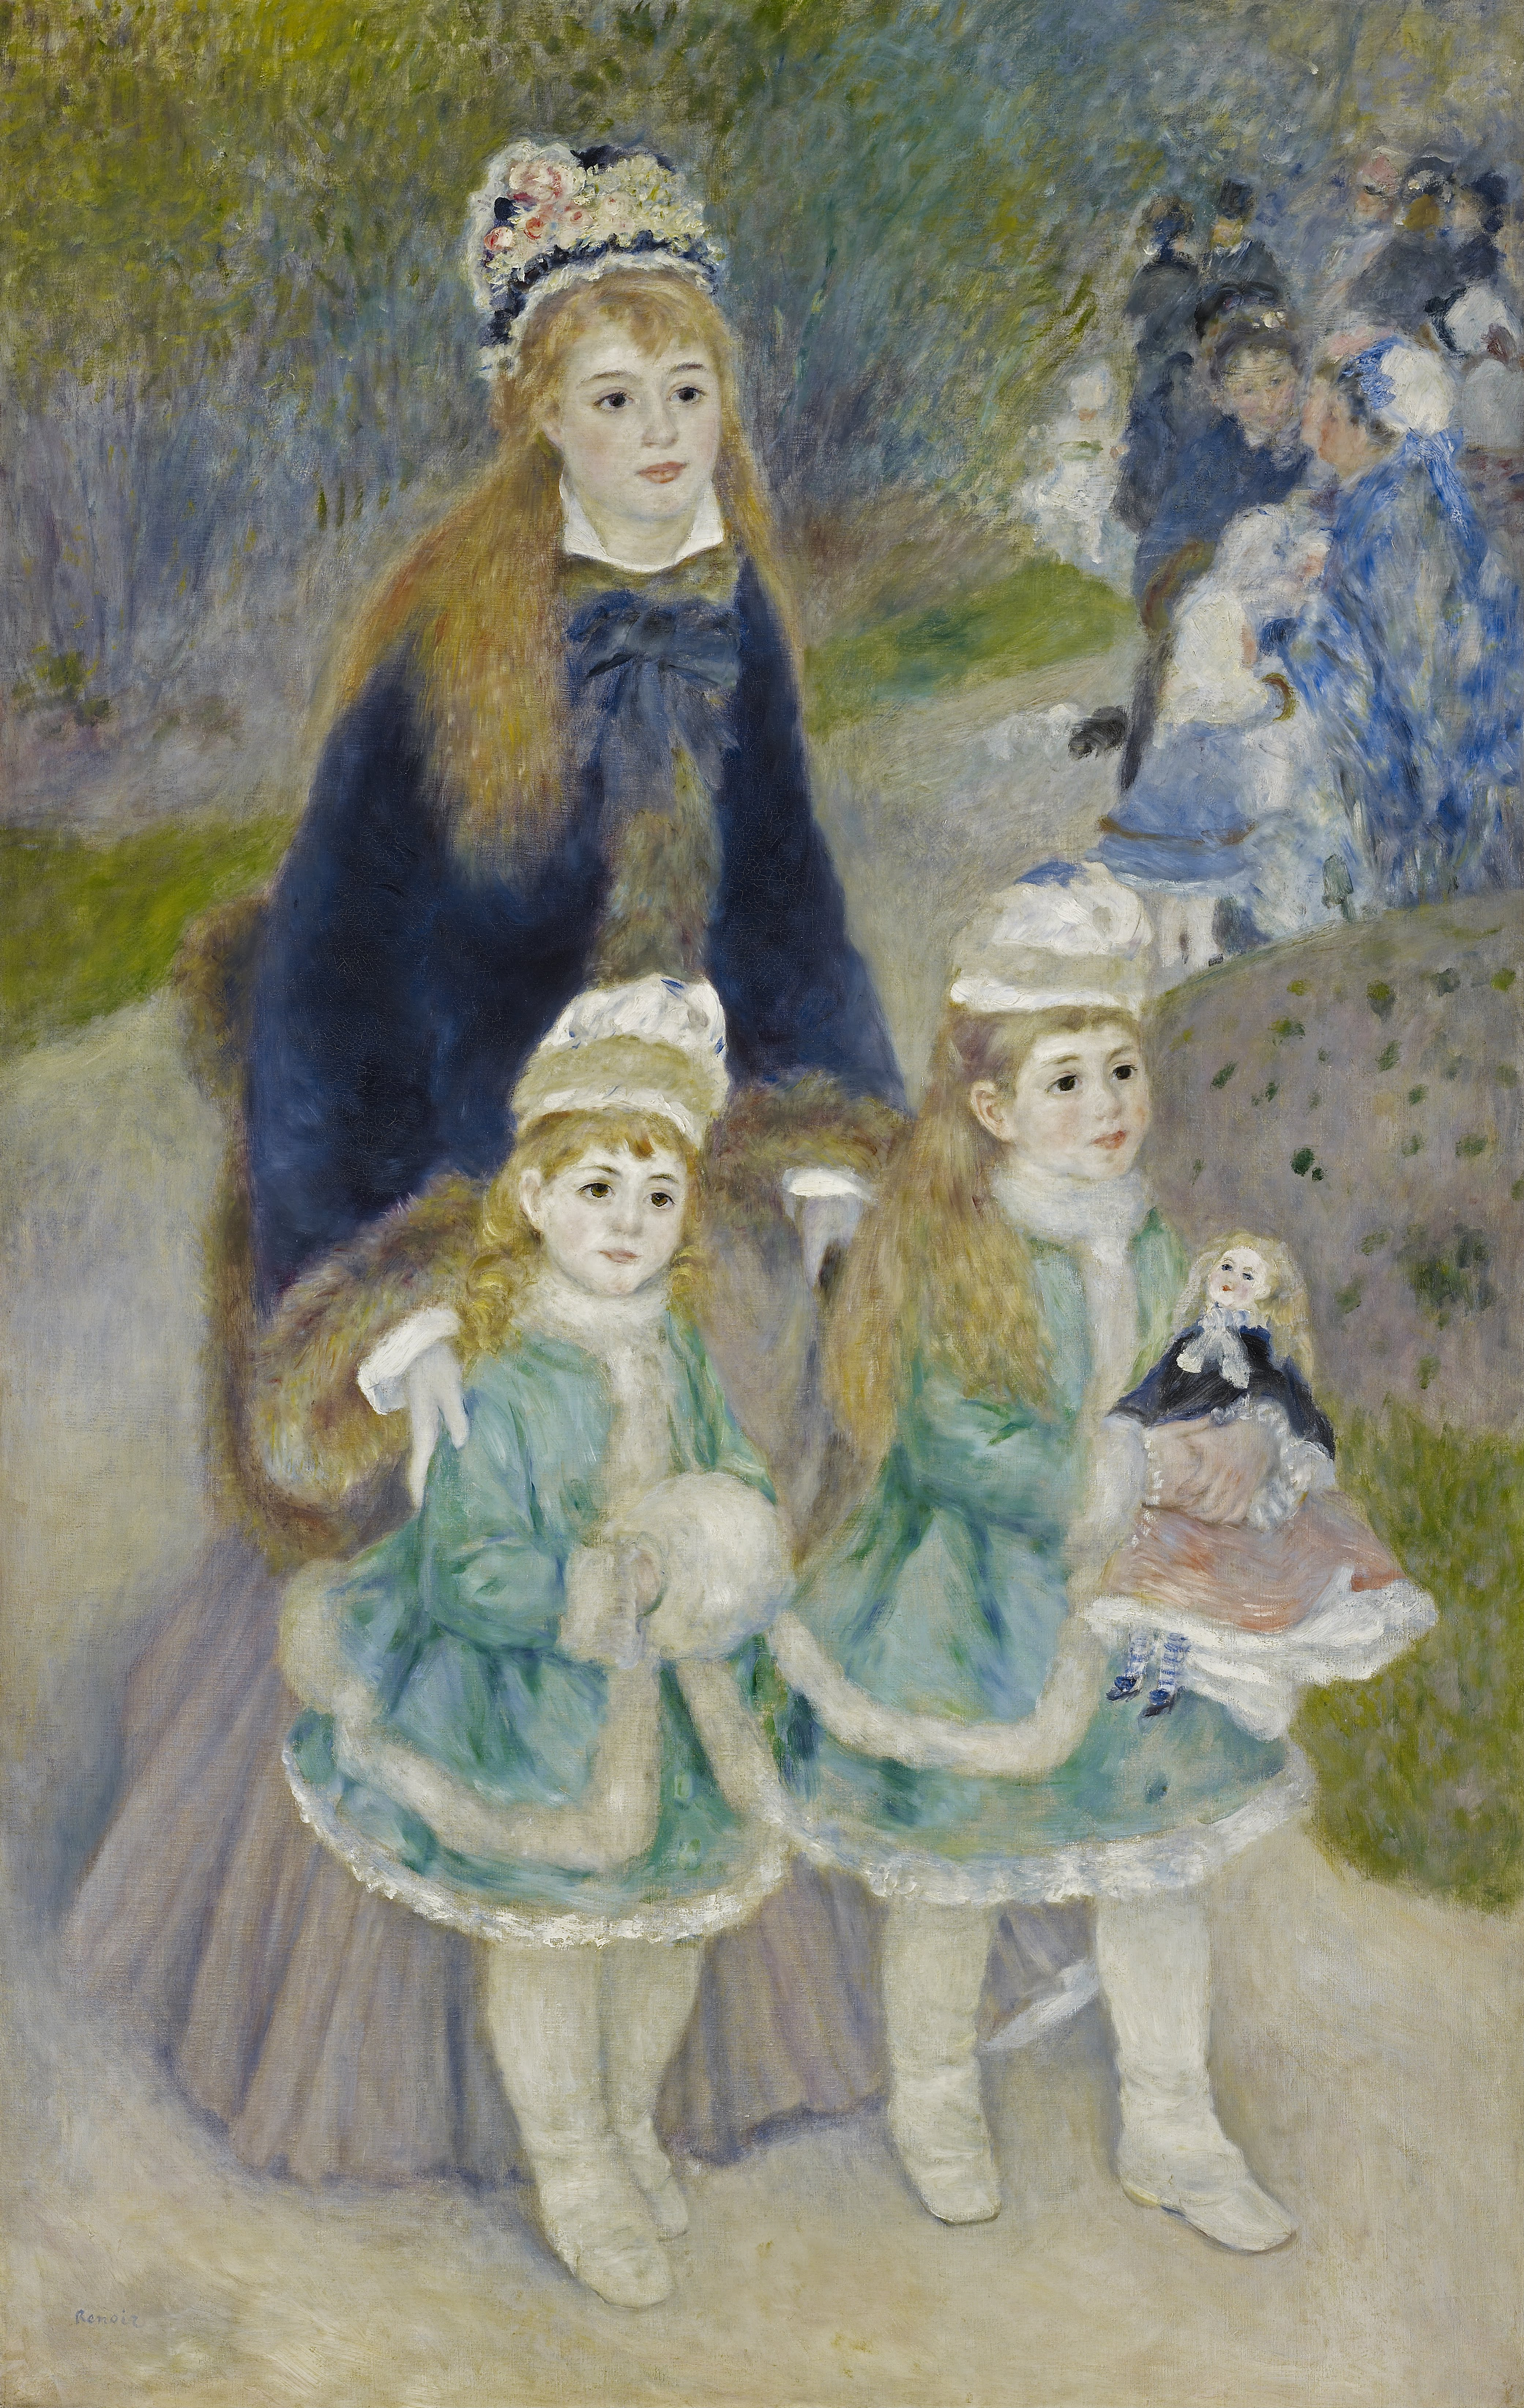 La Promenade by Pierre-Auguste Renoir - 1874-1876 